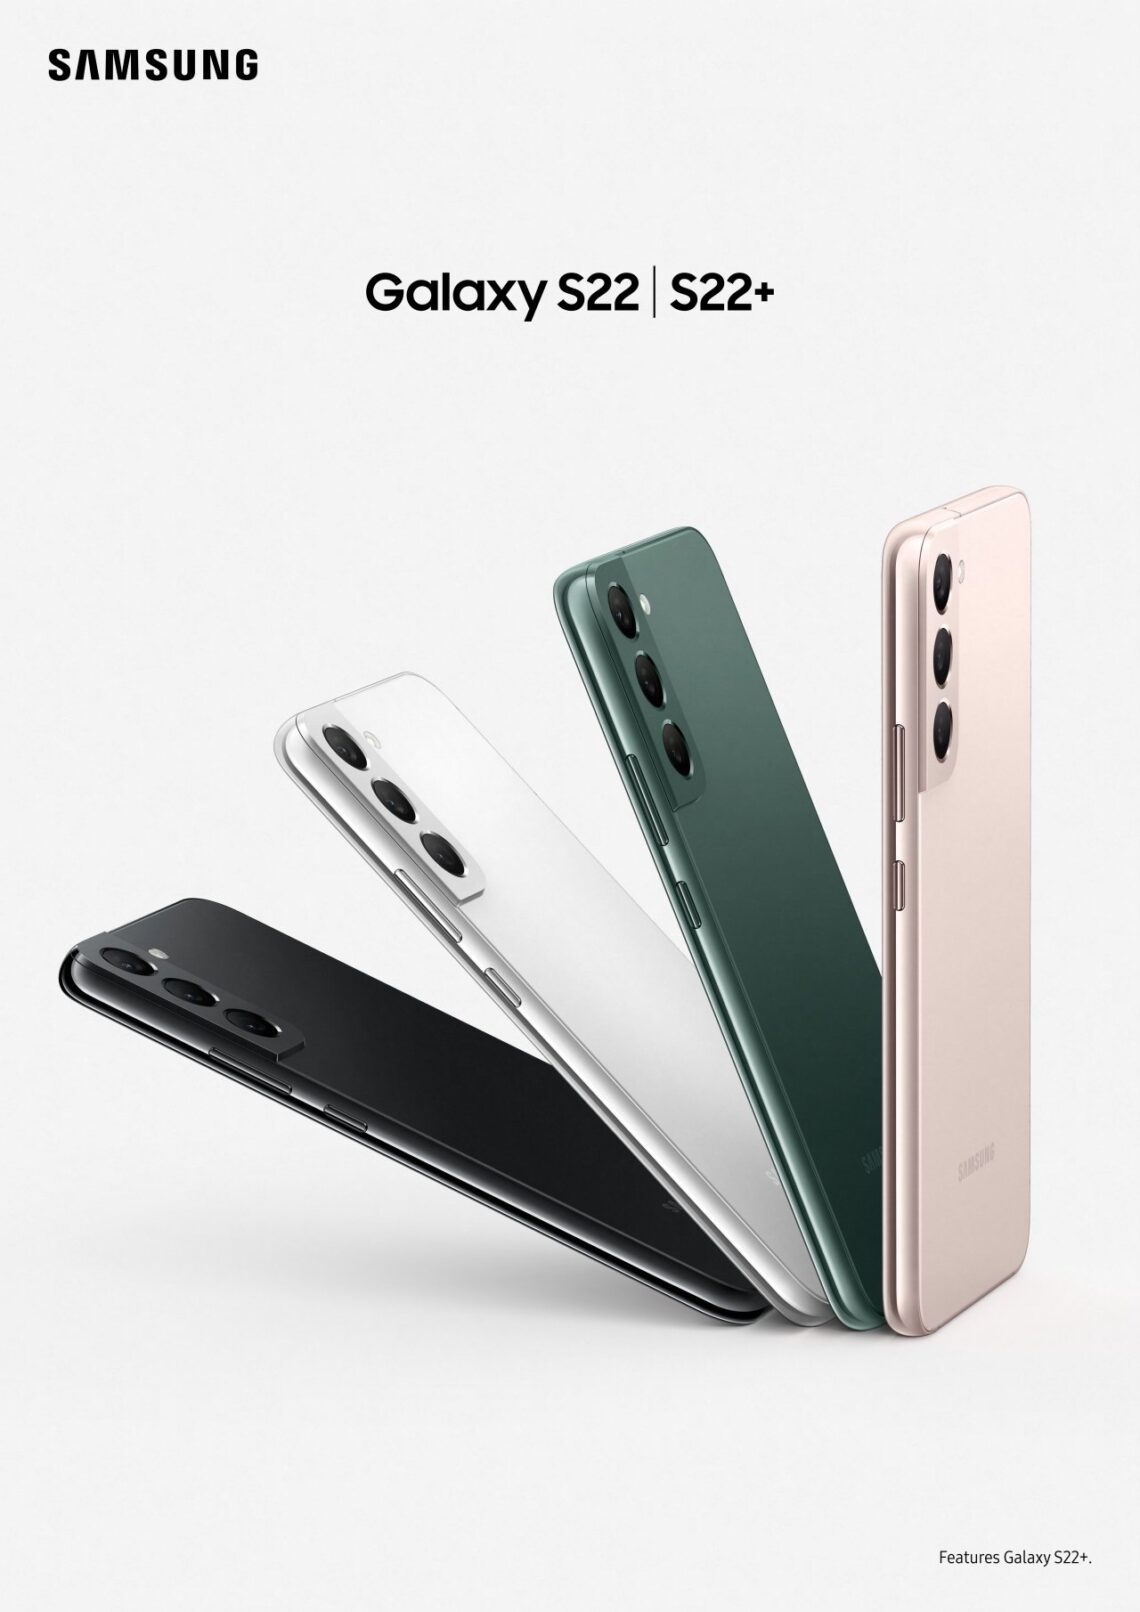 Samsung Galaxy S22 Plus 
https://clickbuy.com.vn/